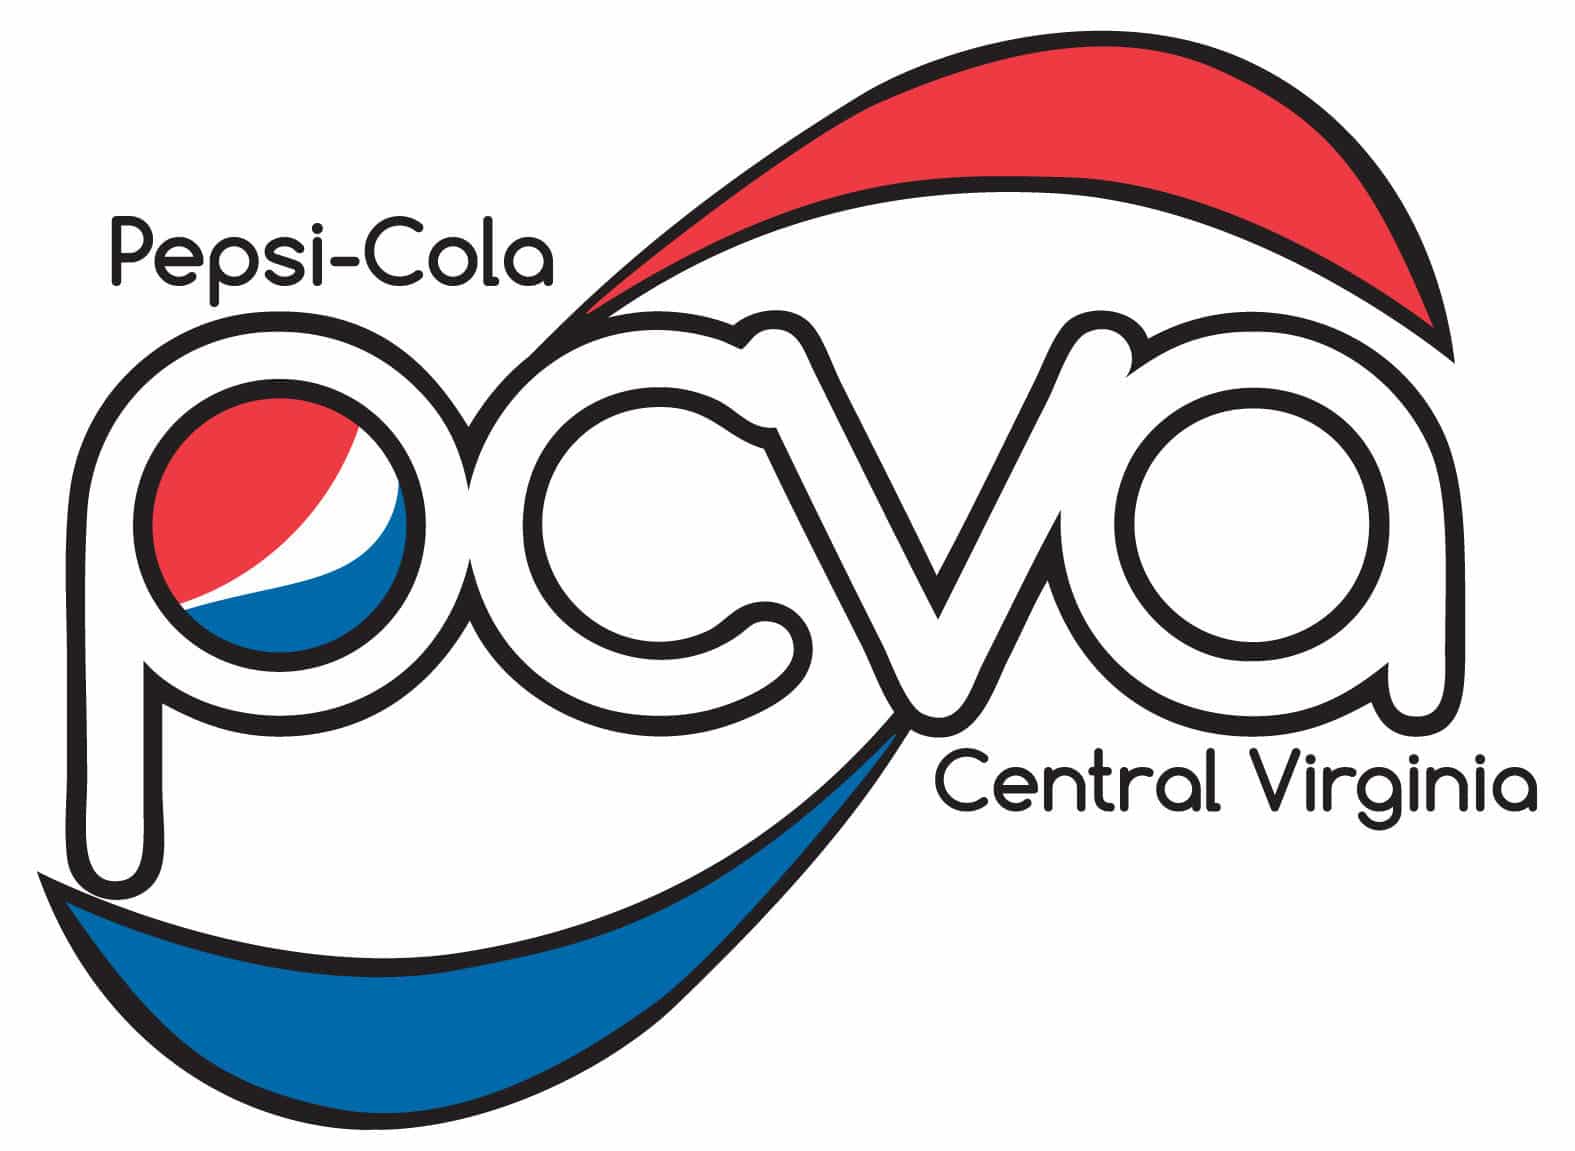 Pepsi-Cola of Central Virginia